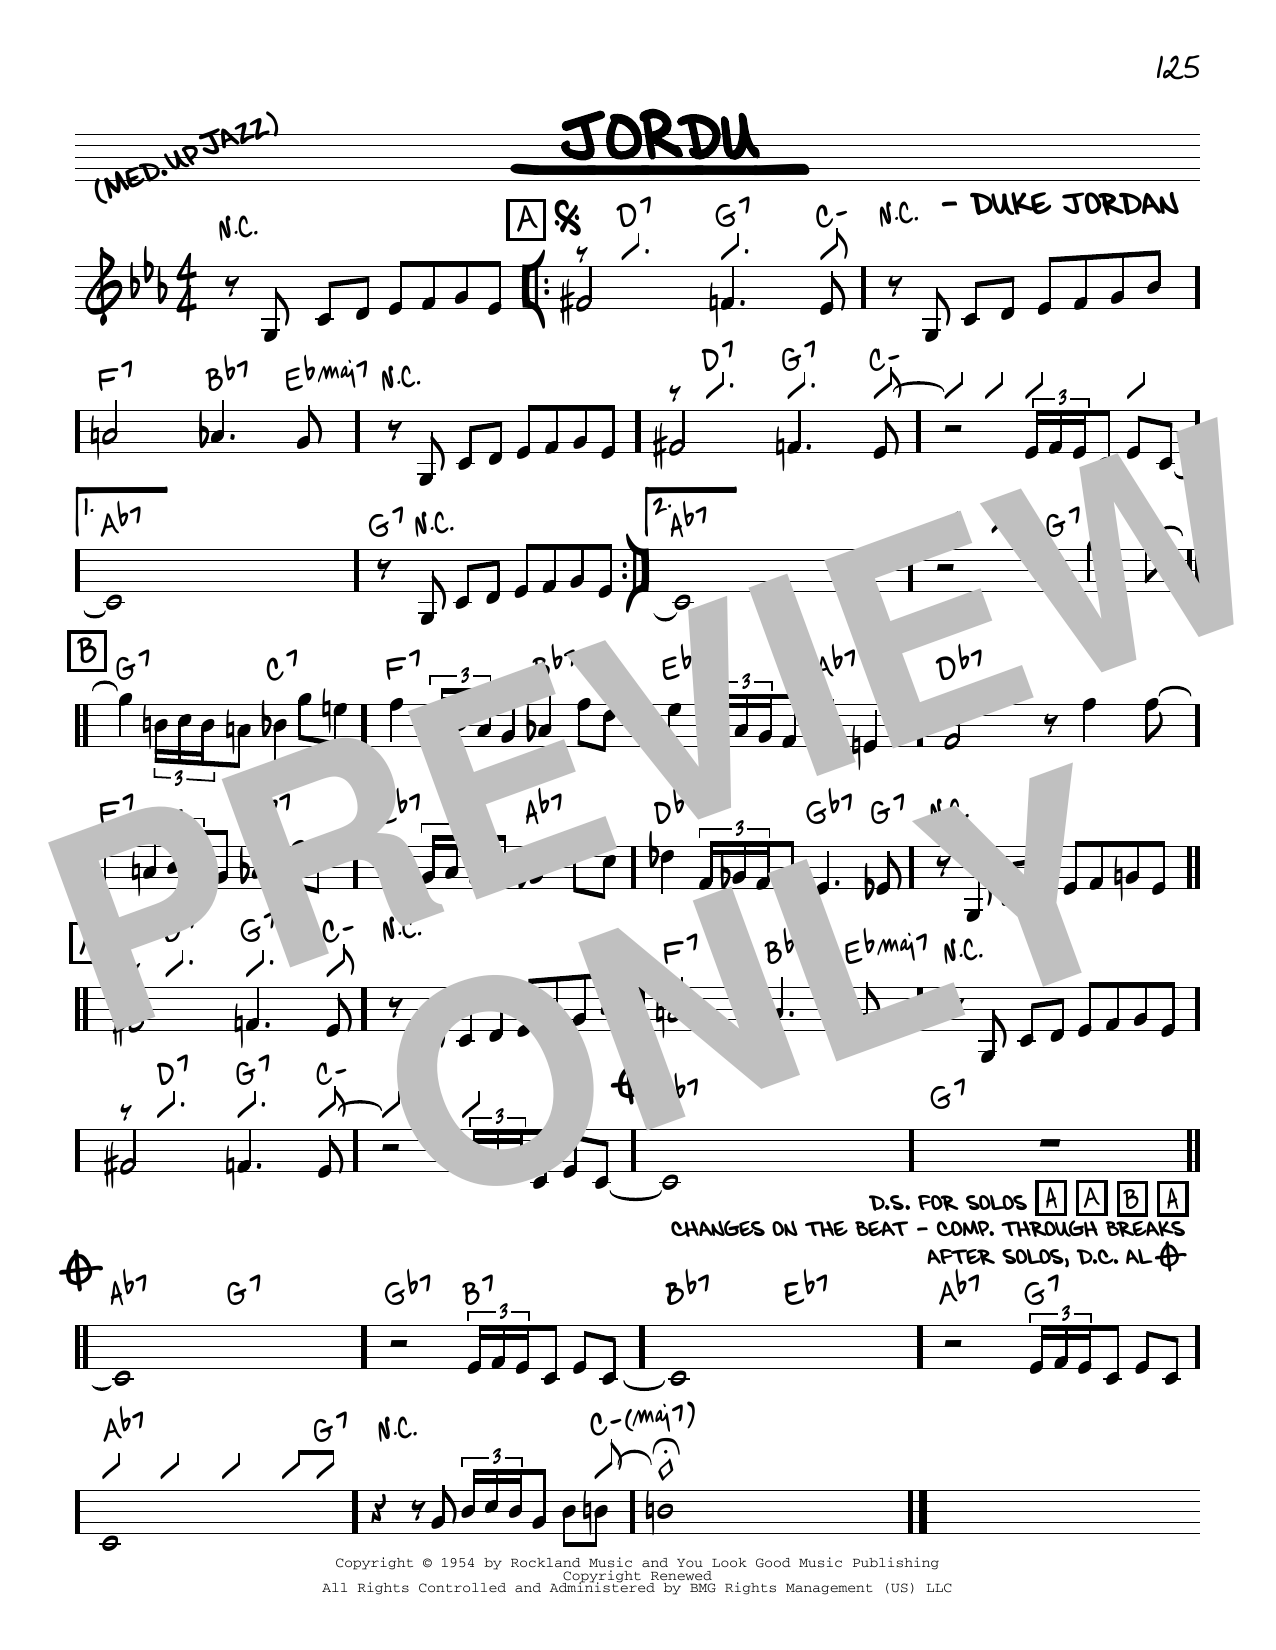 Duke Jordan Jordu Sheet Music Notes & Chords for Piano - Download or Print PDF